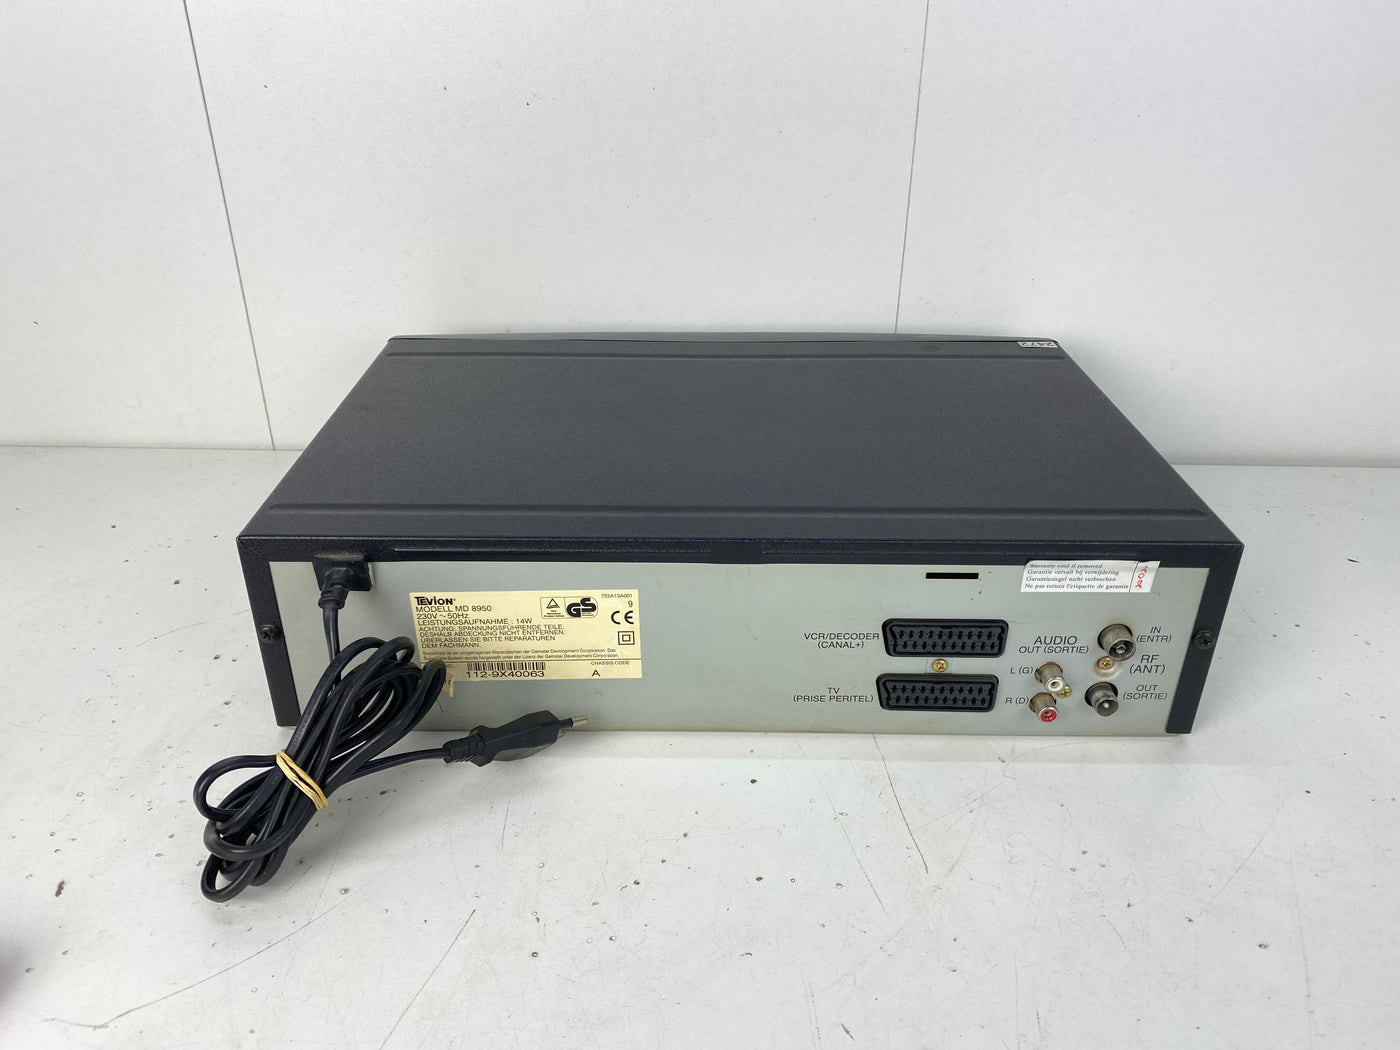 Tevion MD 8950 VHS Video Cassette Recorder